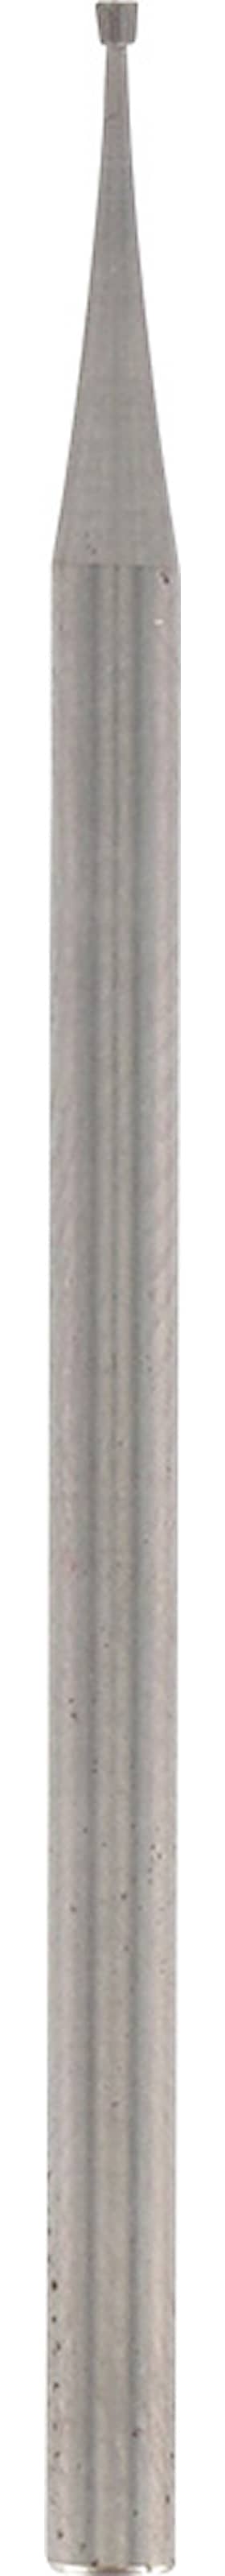 Dremel graverestift 108JA 0,8 mm. 3 stk. pak Graverstift